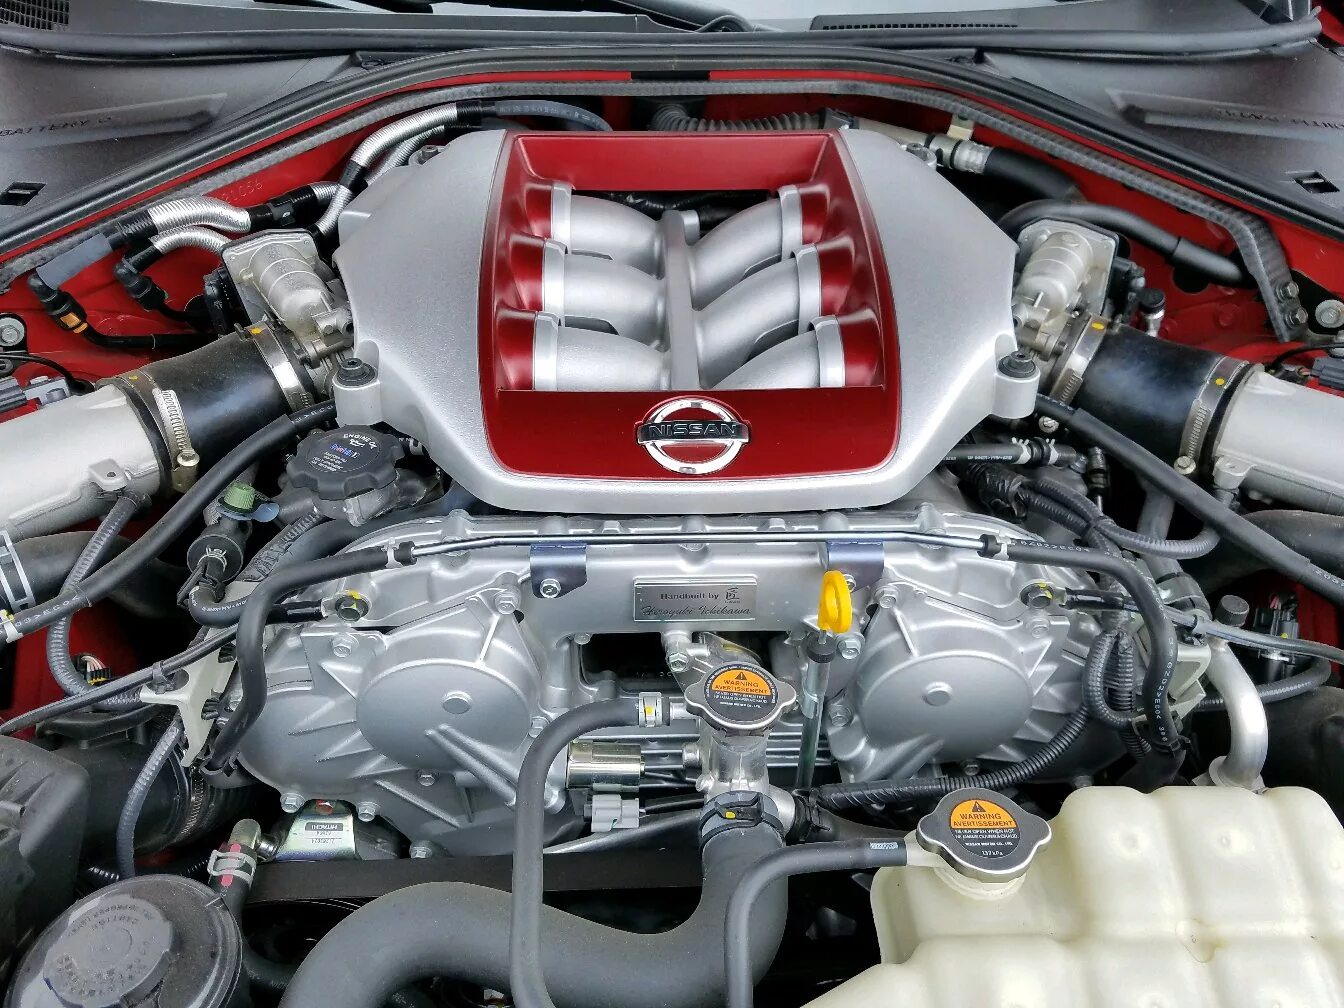 Сток двигатель. Nissan GTR r35 engine. Двигатель Nissan GTR r35. Nissan GTR 35 мотор. Двигатель Ниссан ГТР 35.